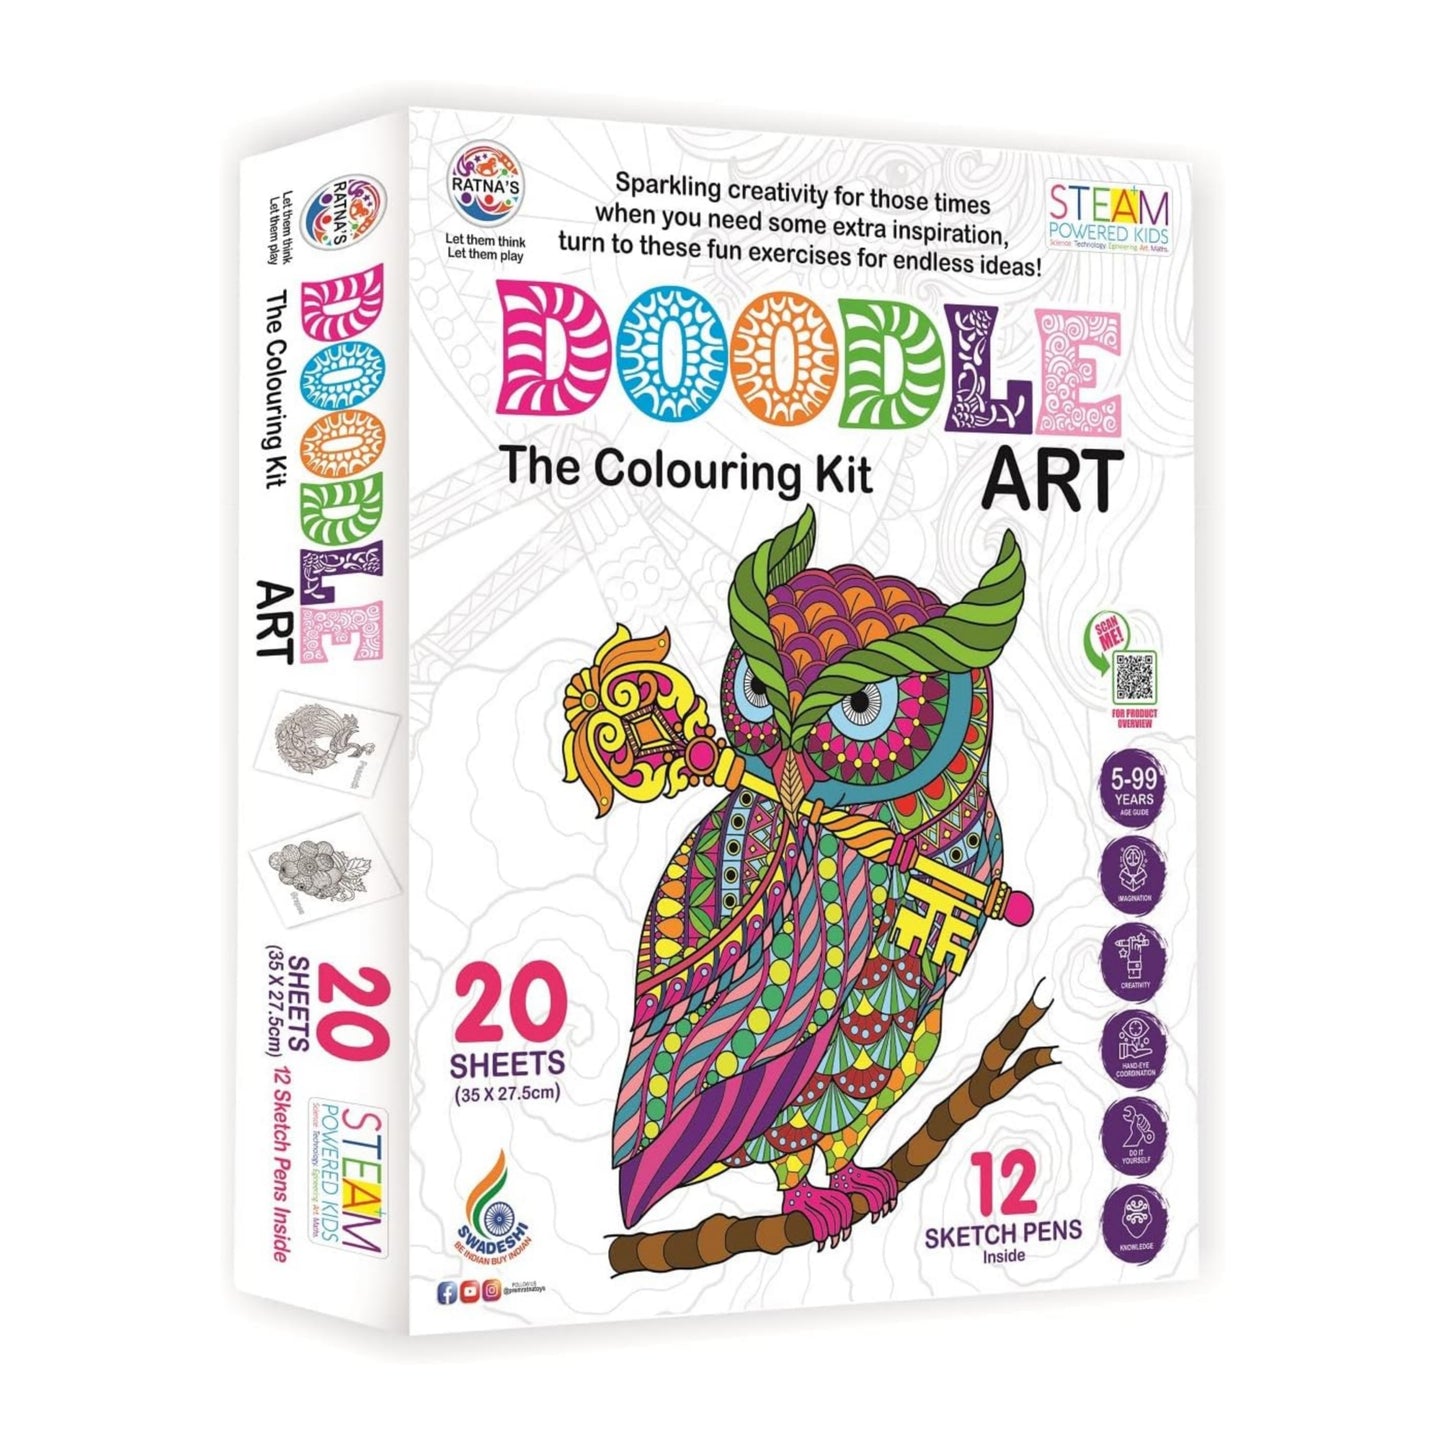 RATNA'S Doodle Art Colouring Kit - 20 Sheets & 12 Sketch Pens